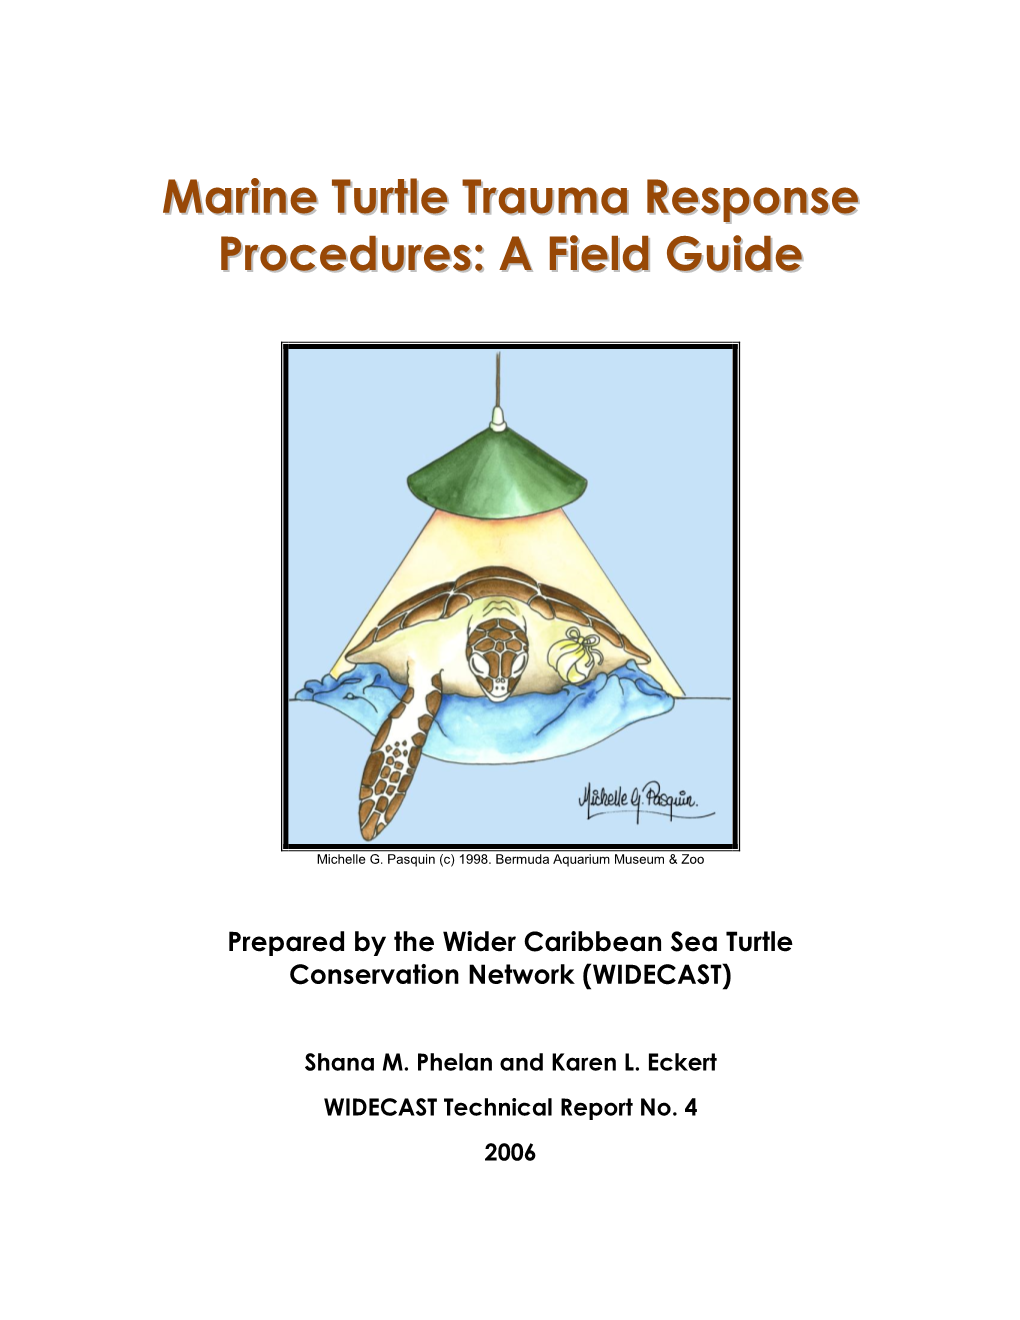 Marine Turtle Trauma Response Procedures: a Field Guide